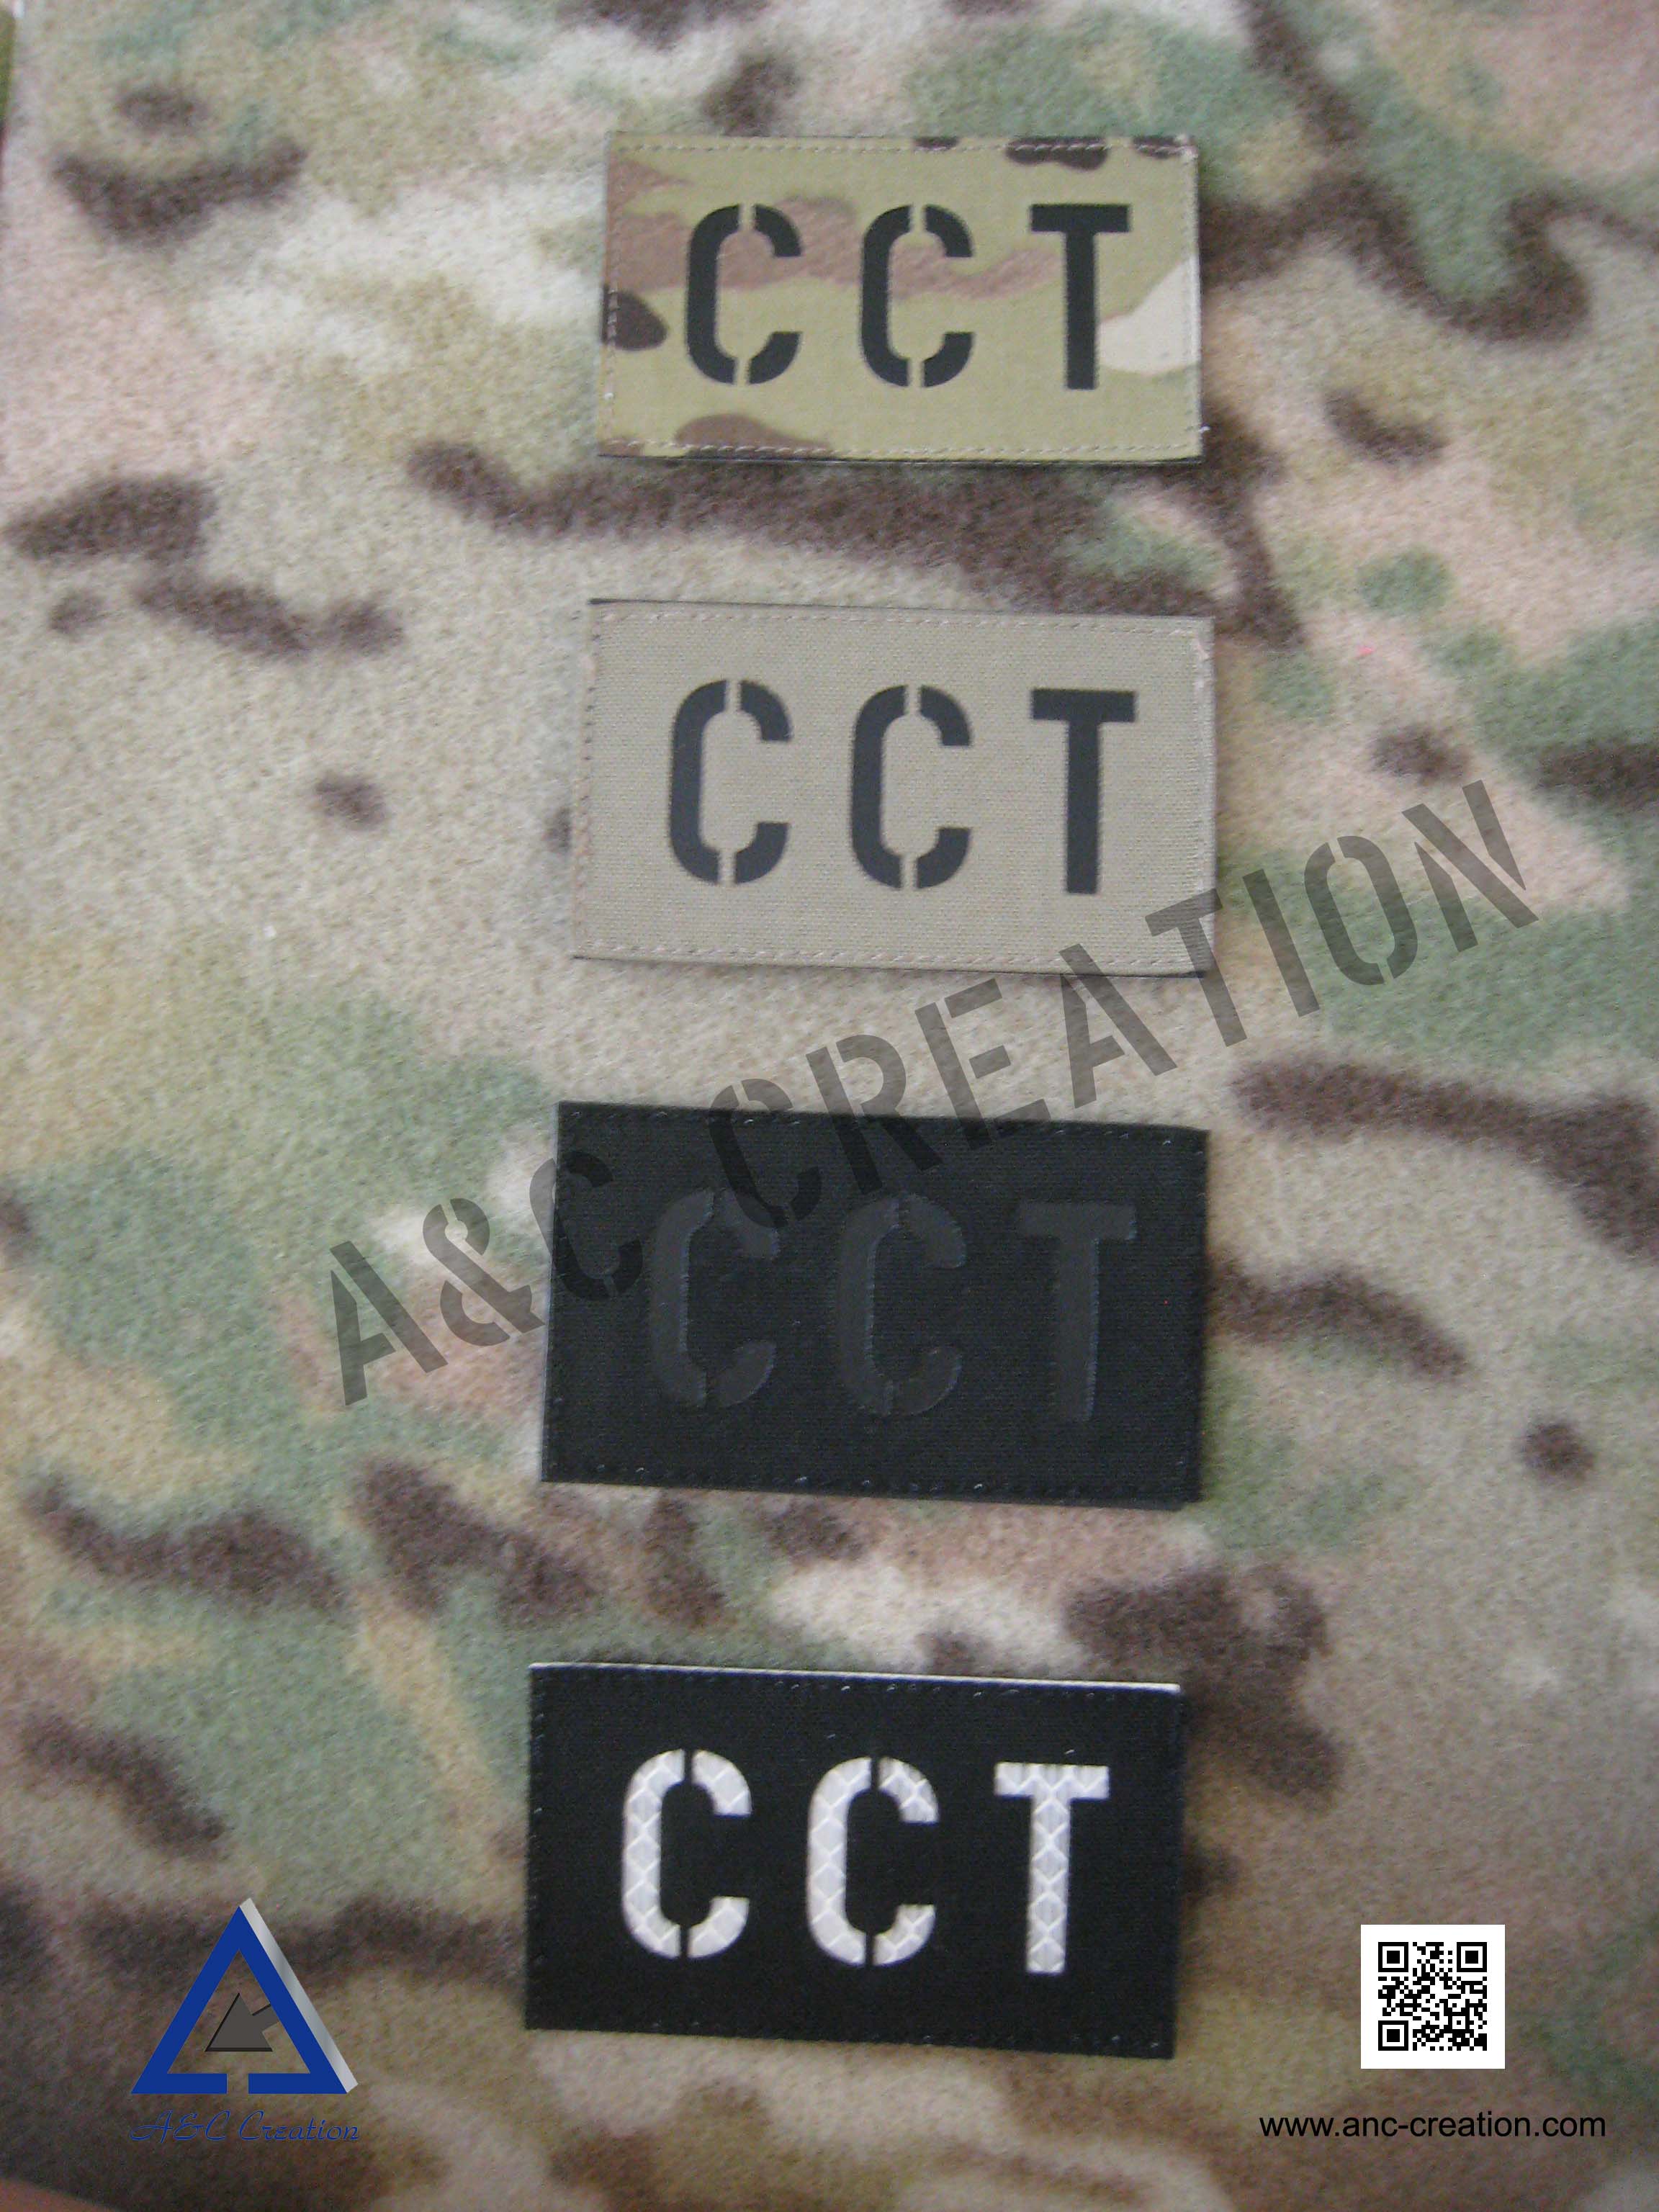 PM009Av-CCT IR (Infra Red) Combat Control Team (CCT) Patch